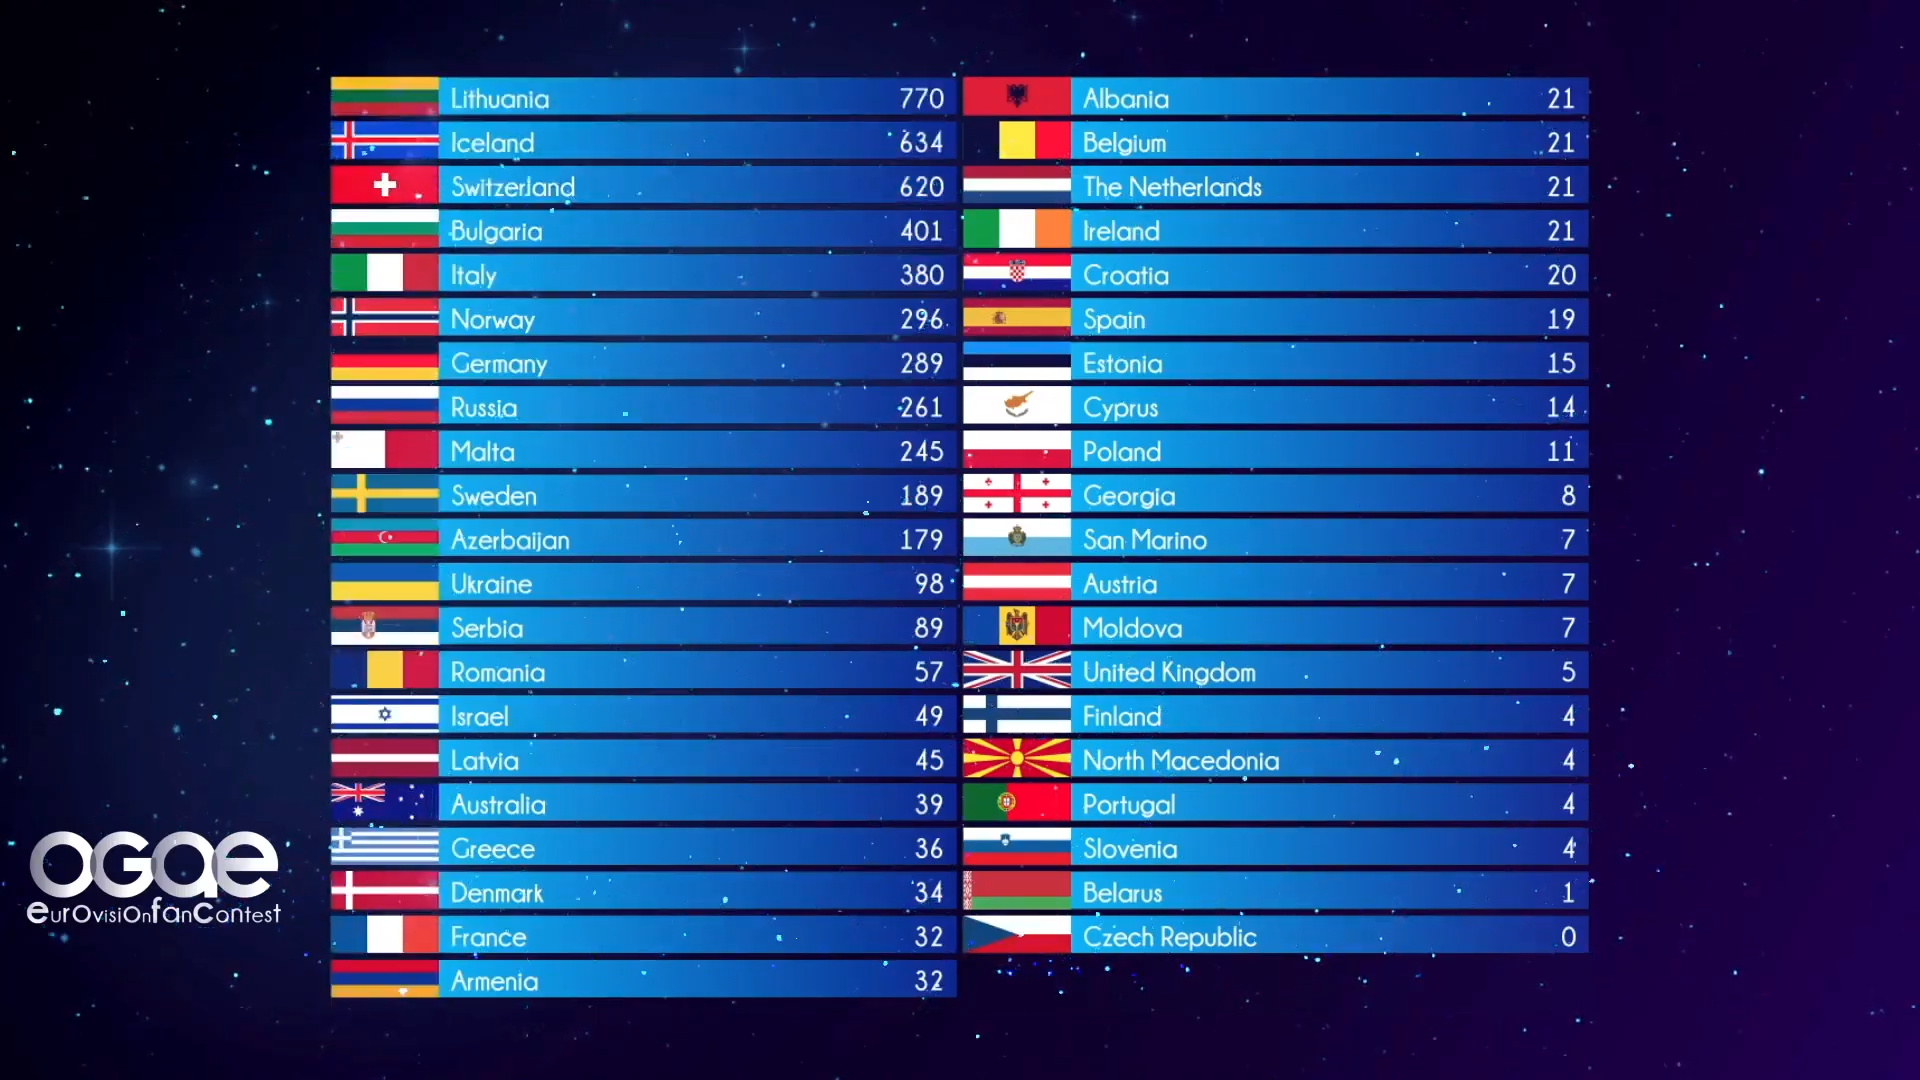 OGAE Eurovision Fan Contest